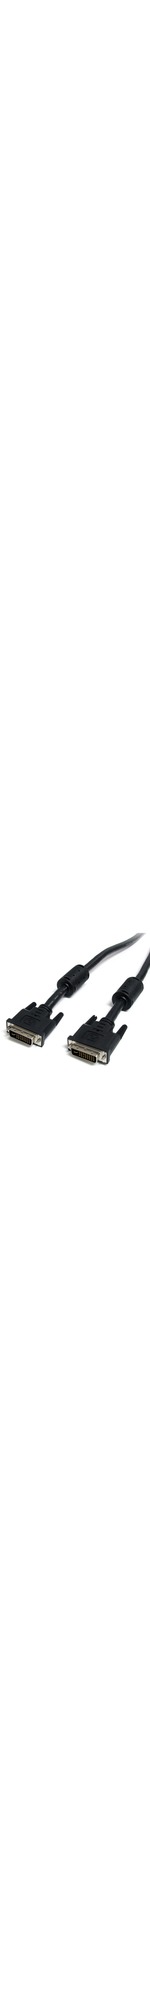 StarTech.com 6 ft DVI-I Dual Link Digital Analog Monitor Cable M/M - 1 x DVI-I Dual-Link Male Video - Black